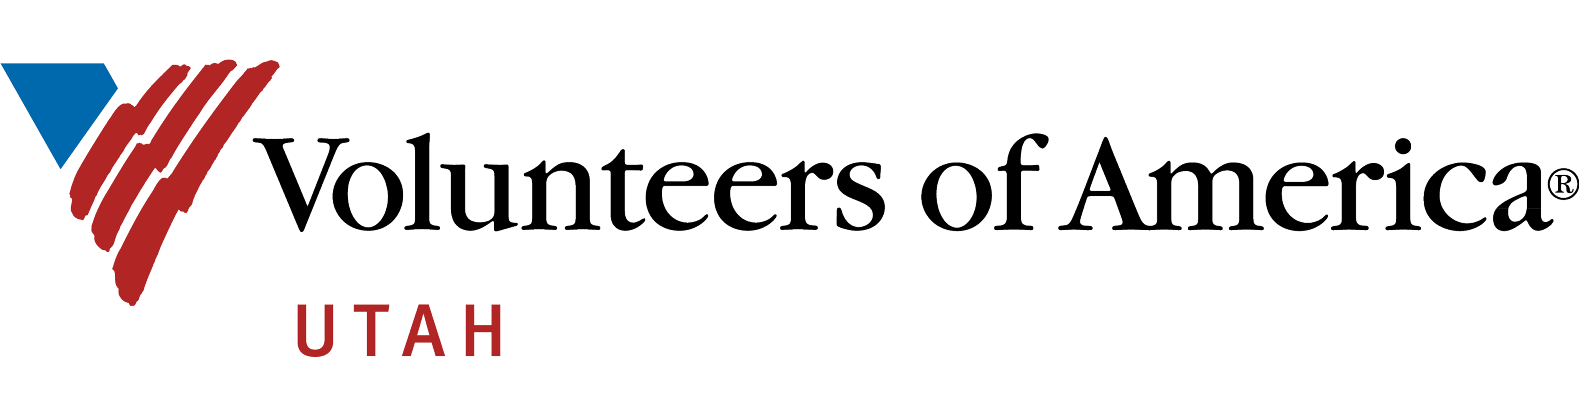 the logo for Volunteers of America Utah